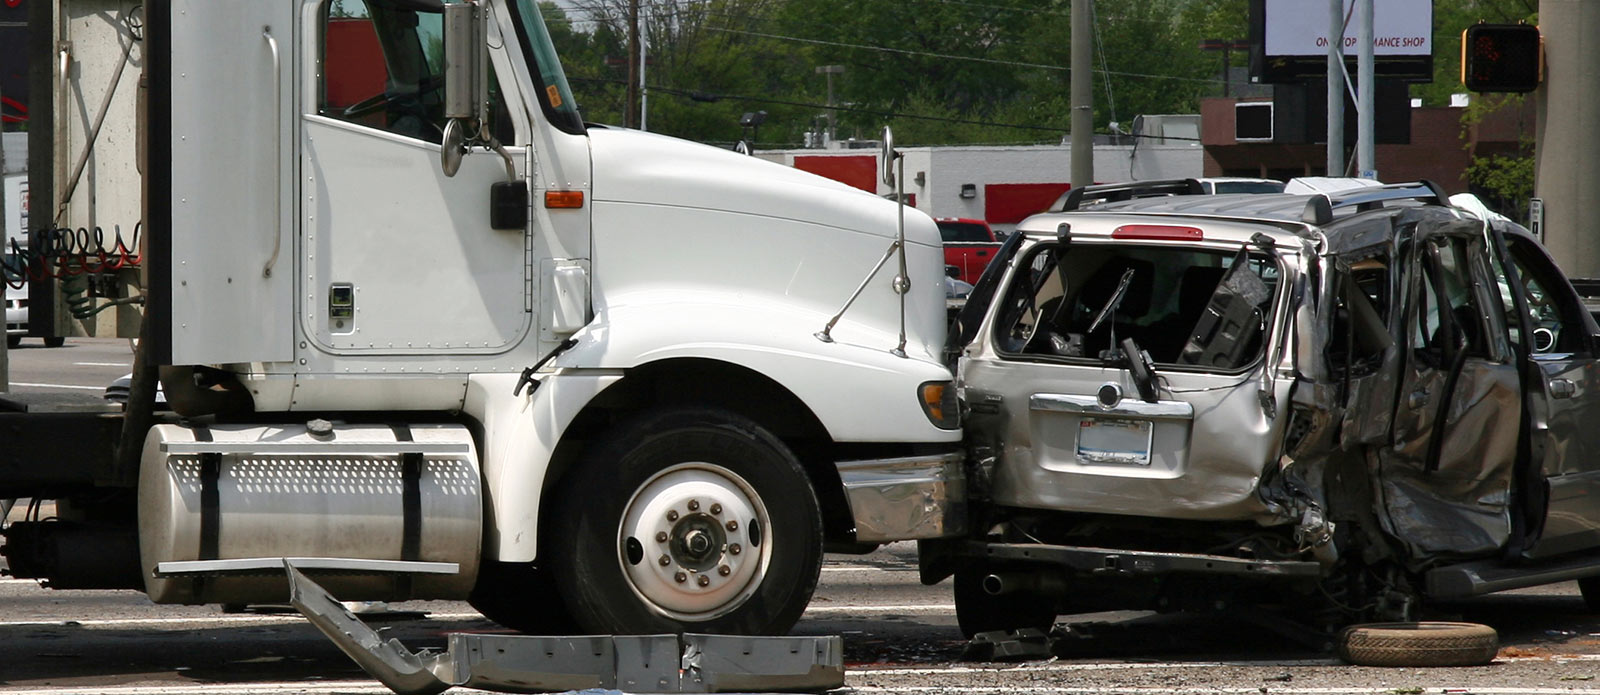 Accident involving a truck and a mini-van vehicle.